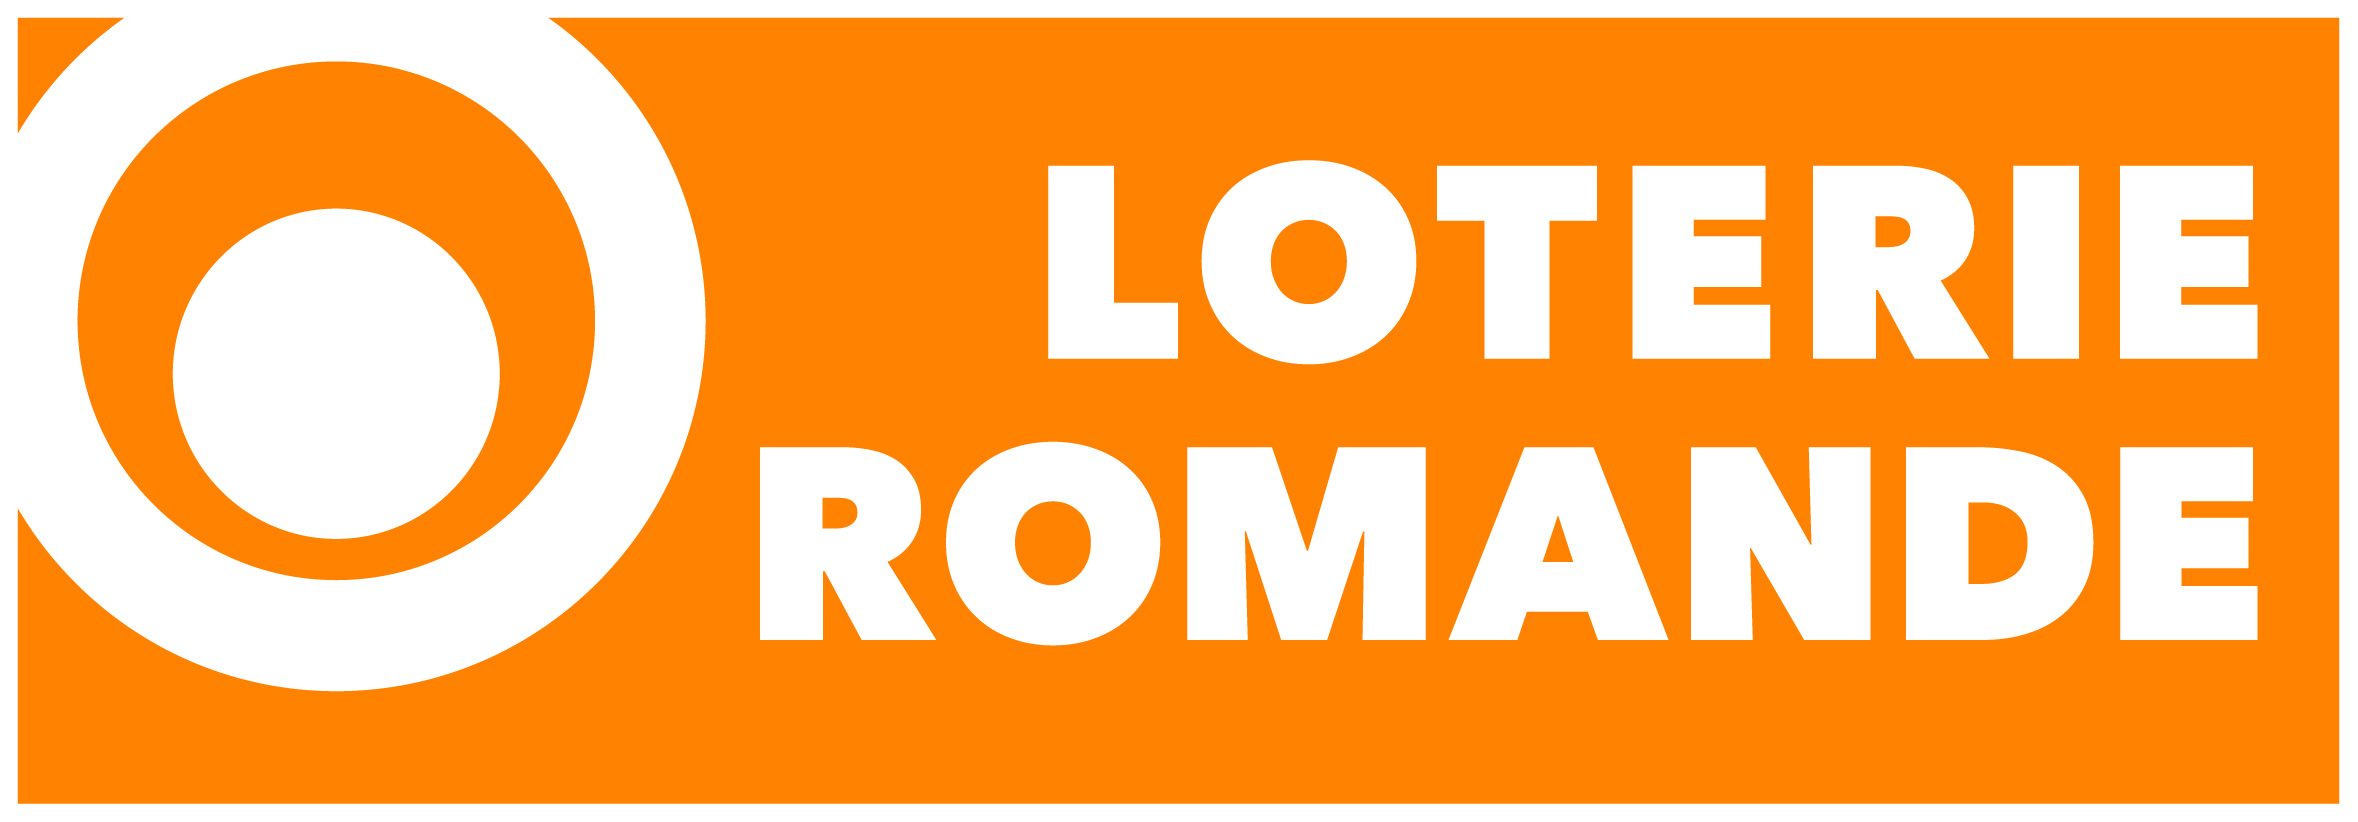 Logo de la Loterie Romande